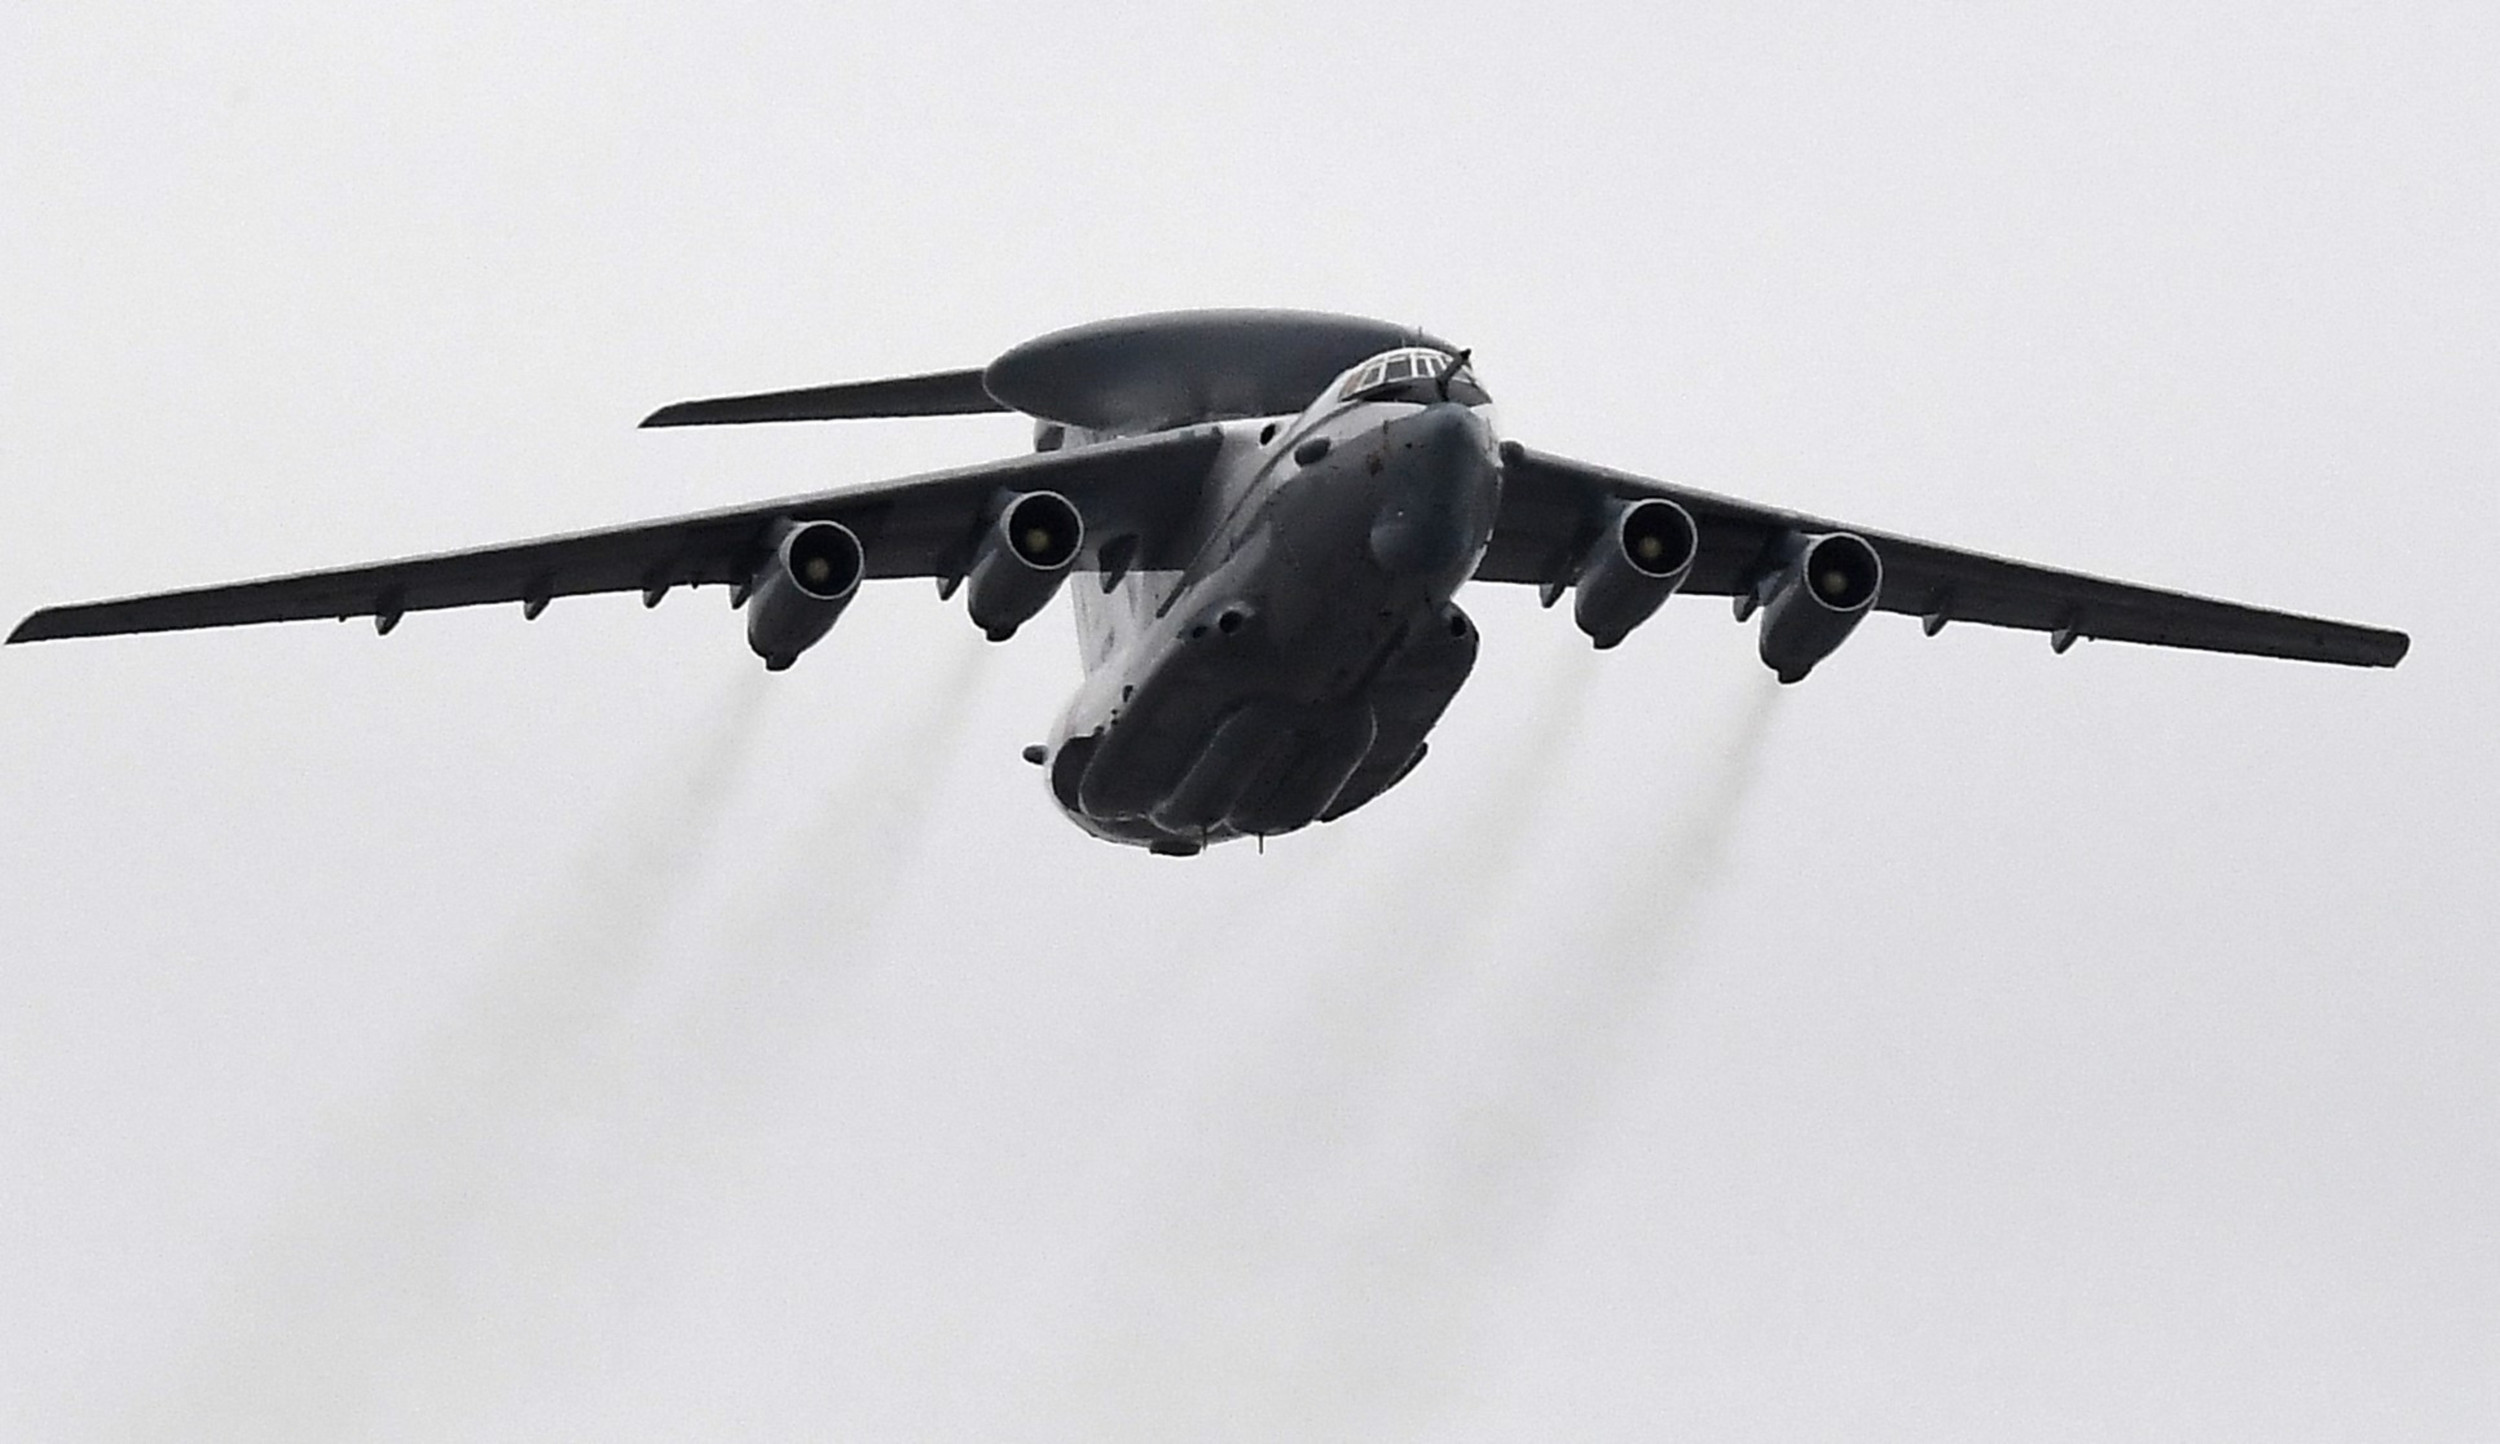 Rusko uzemnilo letouny A-50 po ukrajinských útocích: Velká Británie